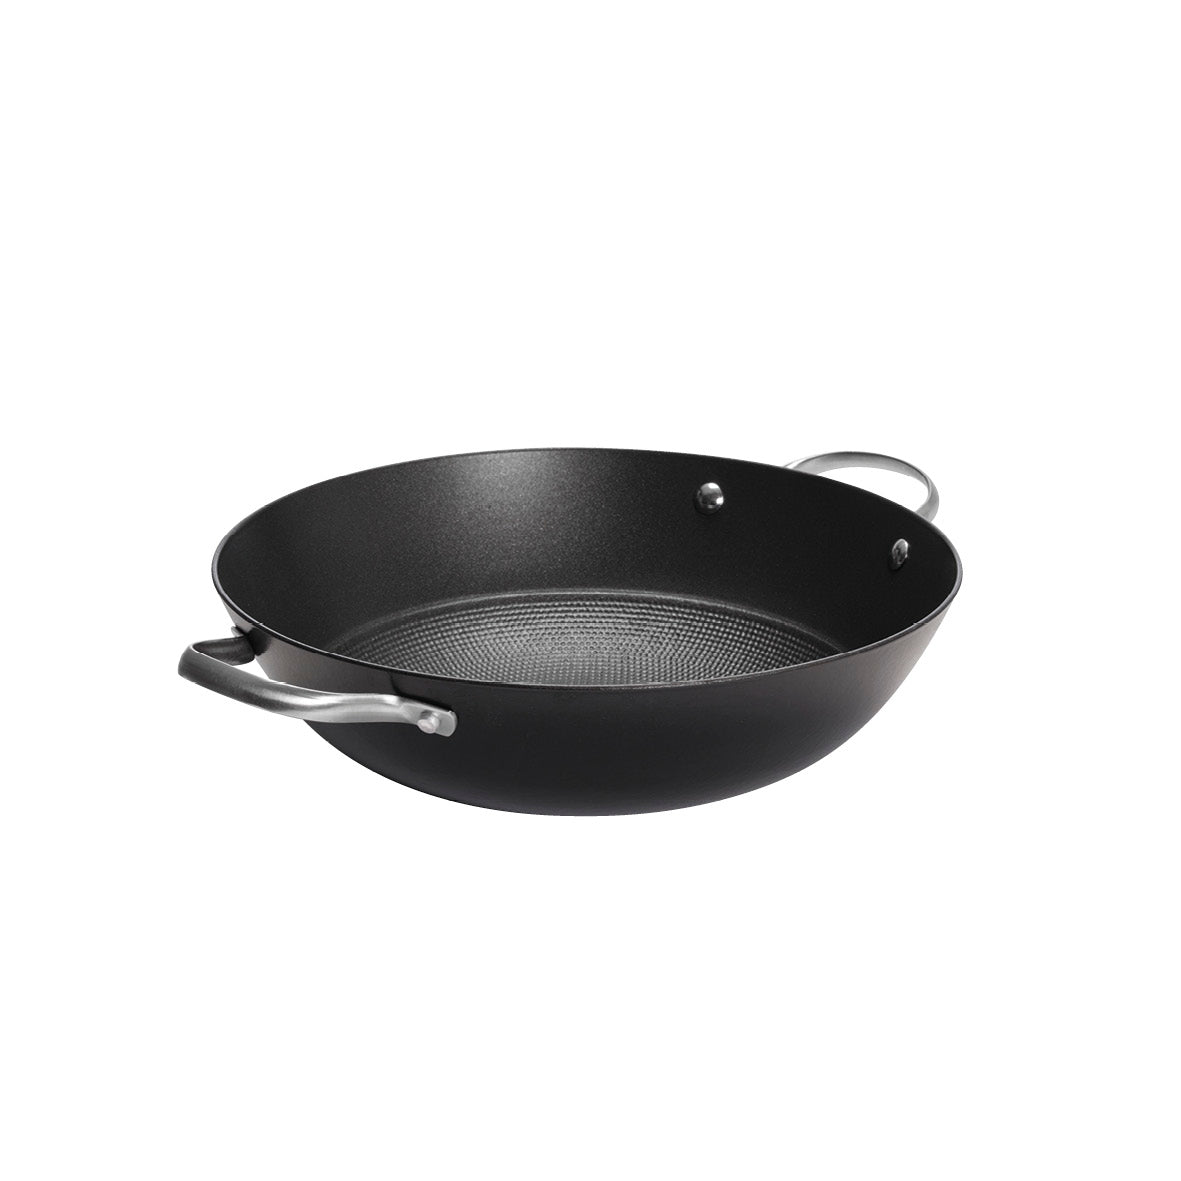 Enameled cast iron wok pan with lid 30cm - Black